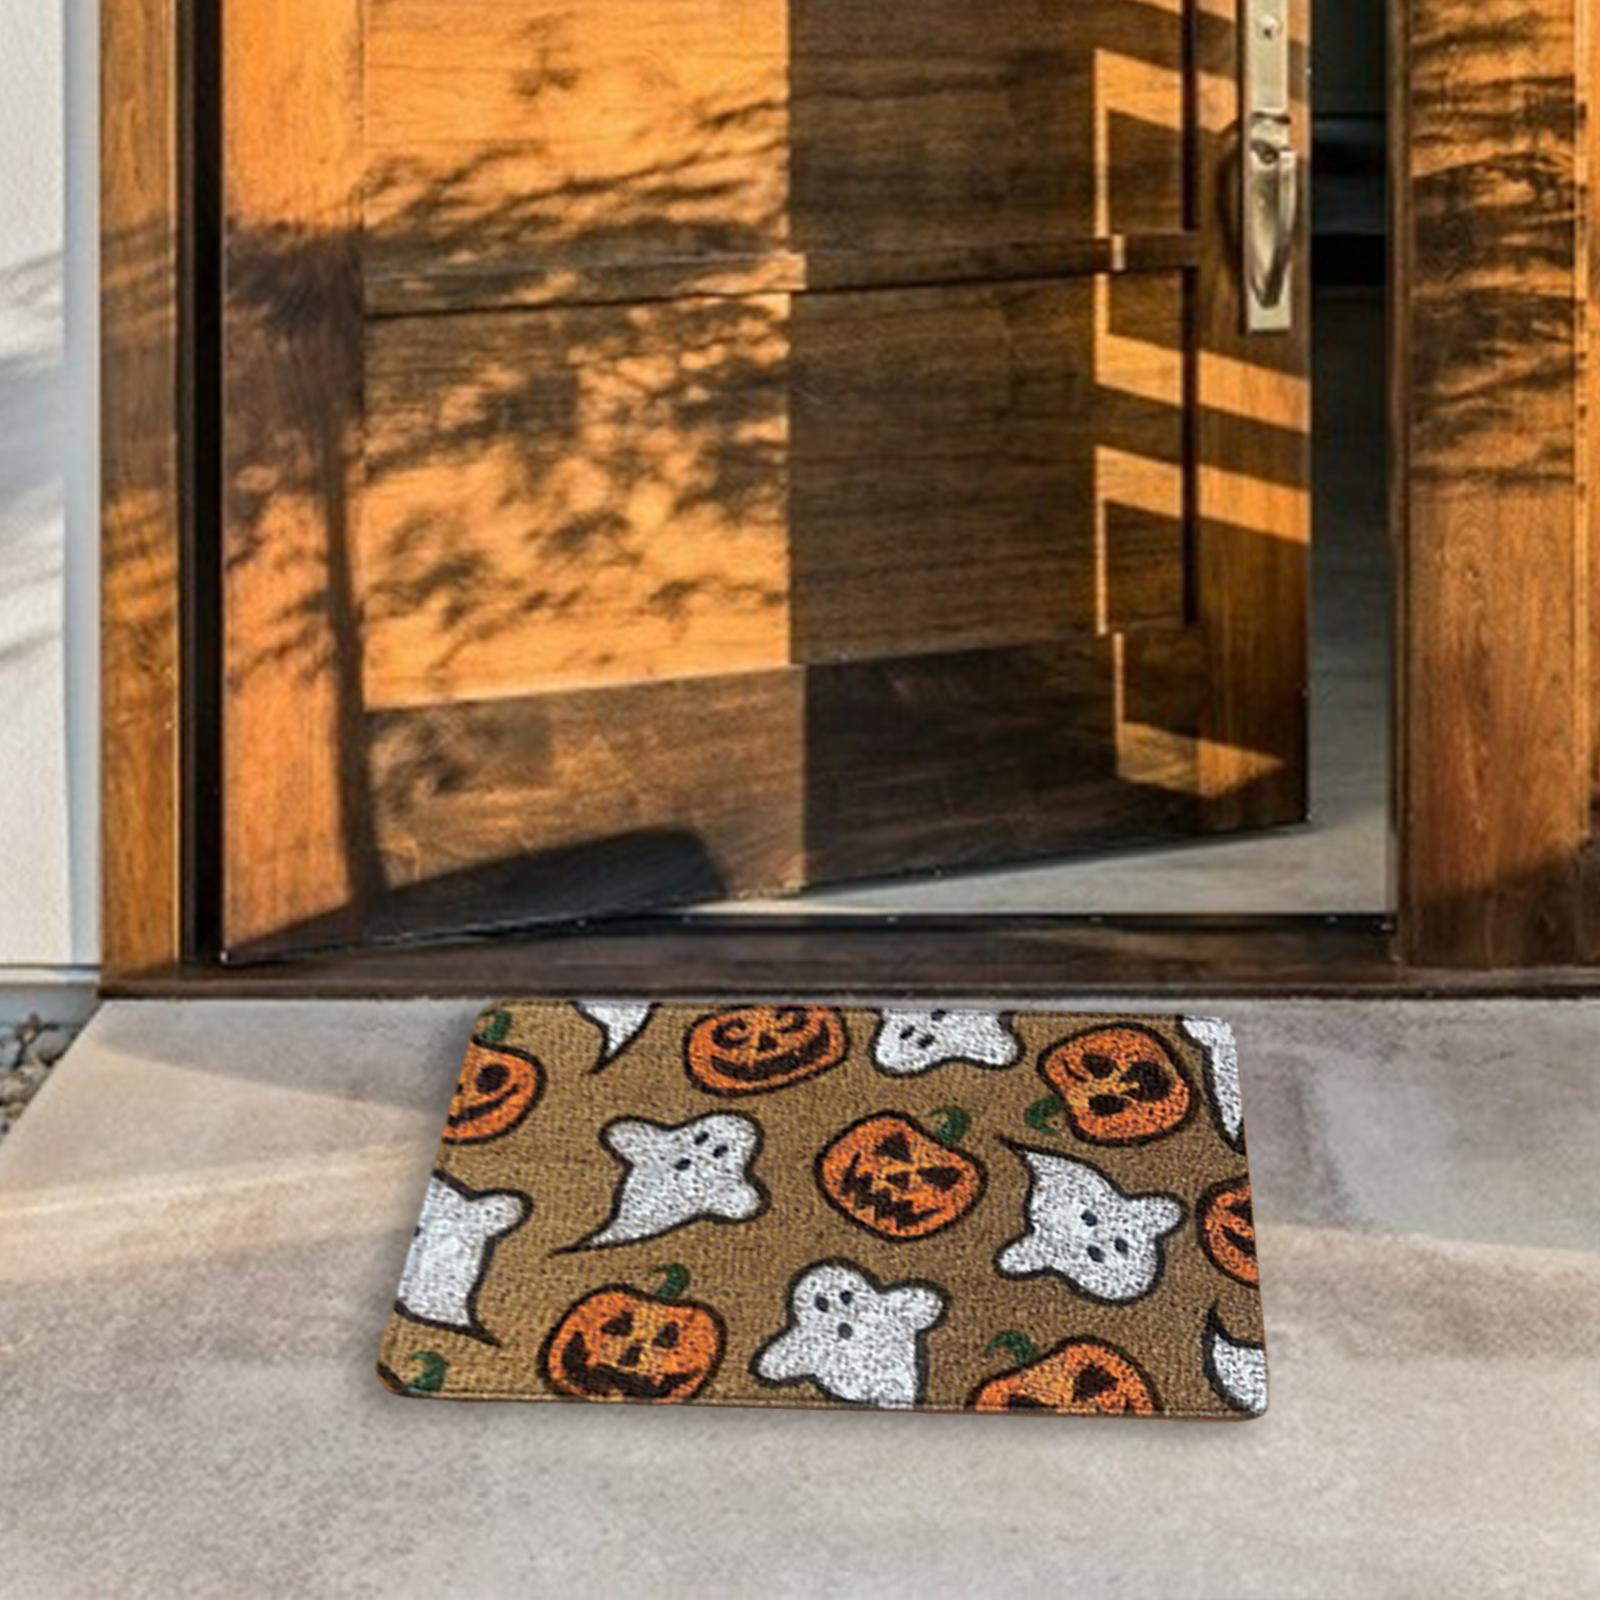 Printed Halloween Doormat Pumpkin Non-Slip Area Area Rug Office Bathroom style 15